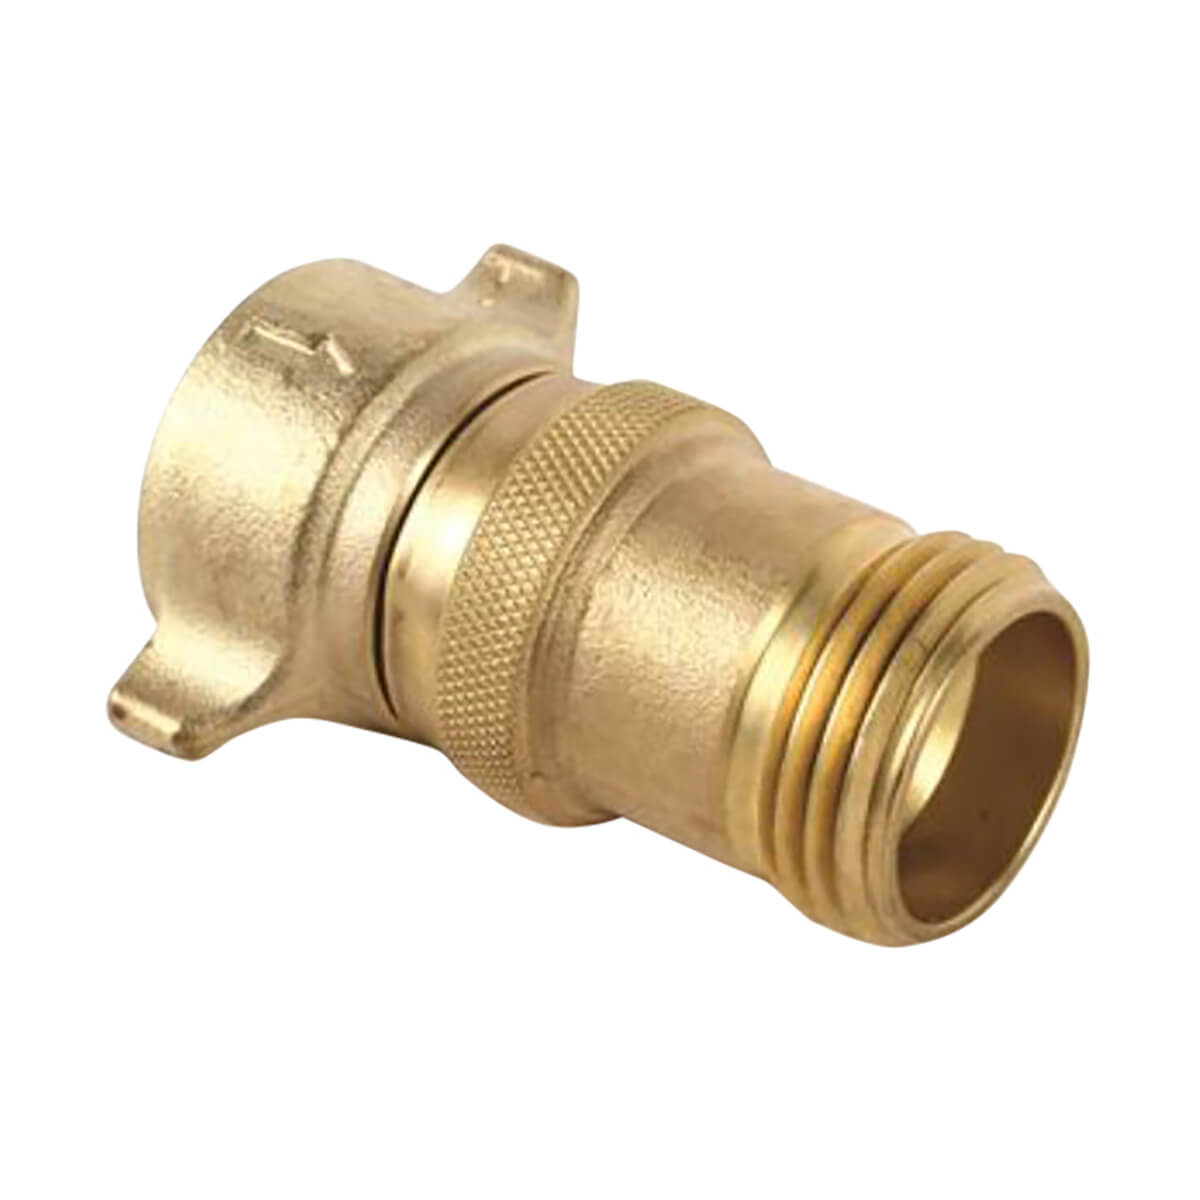 Water Pressure Regulator Brass Lead-Free - 3/4-in